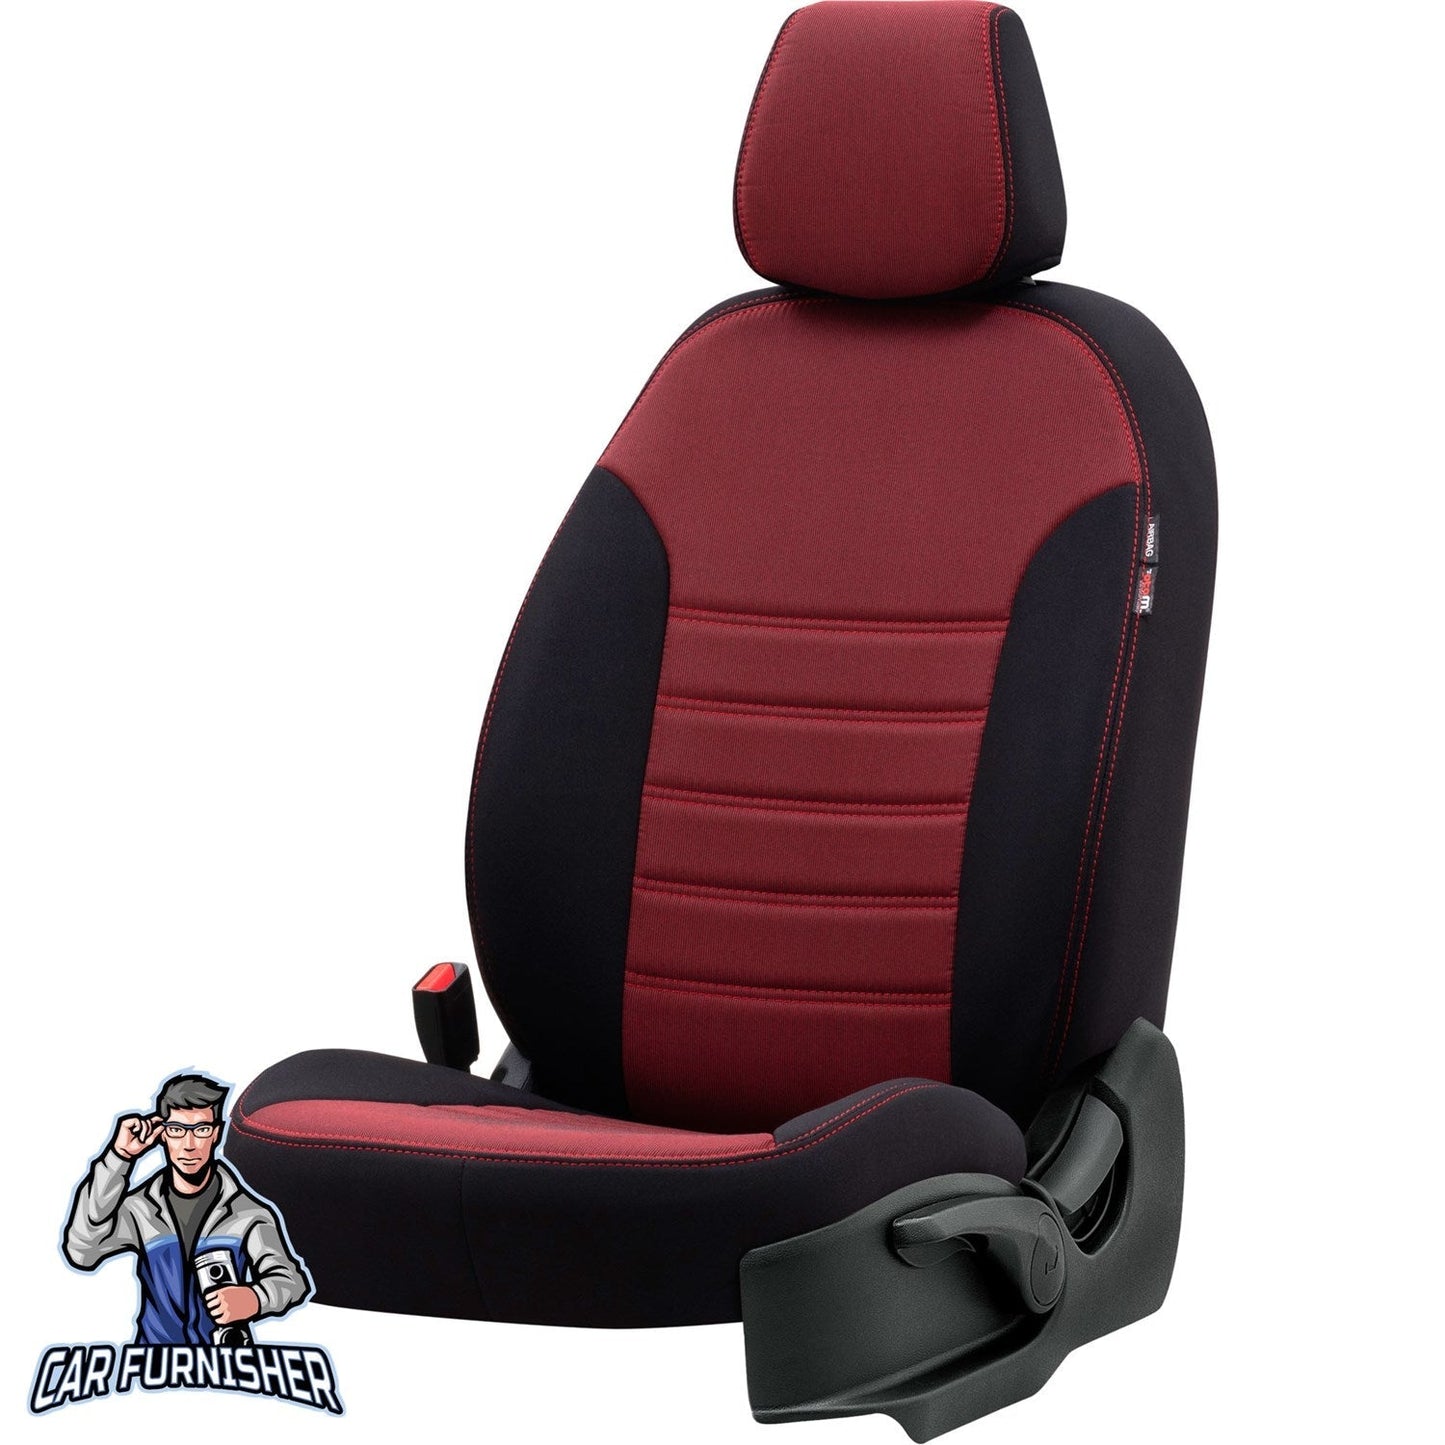 Skoda Kamiq Seat Covers Original Jacquard Design Red Jacquard Fabric